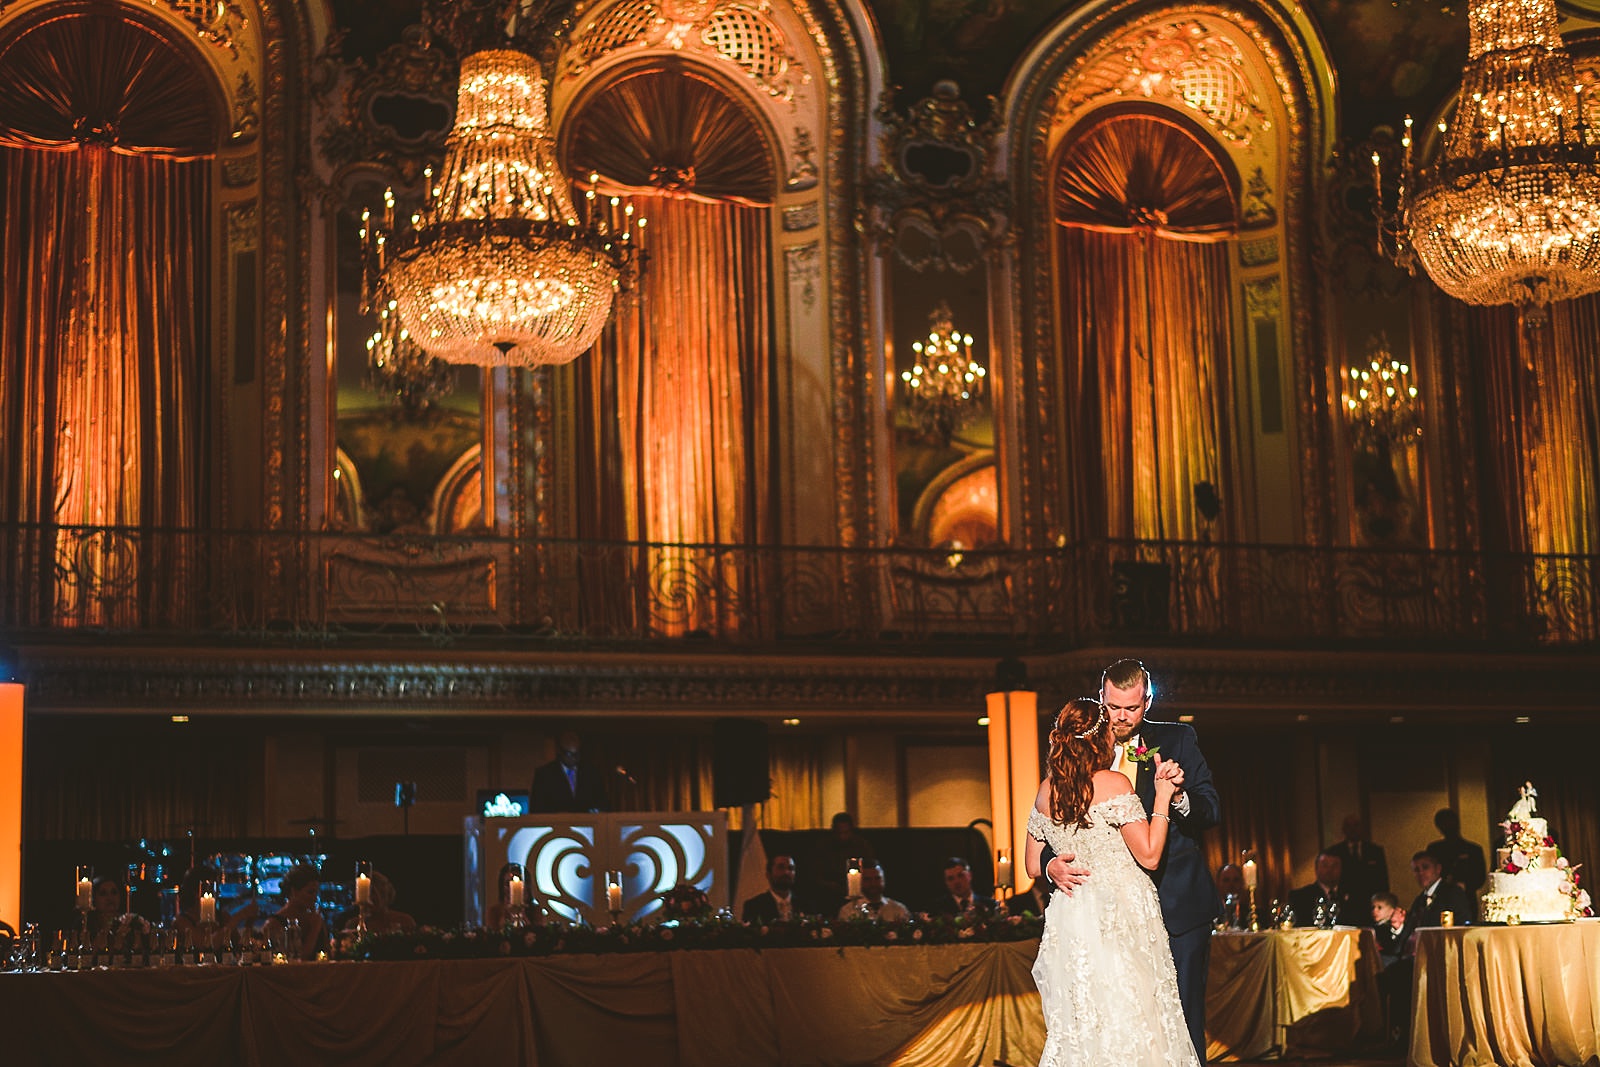 60 grand first dance at chicago hilton - Hilton Chicago Wedding Photographer // Sarah + Aaron